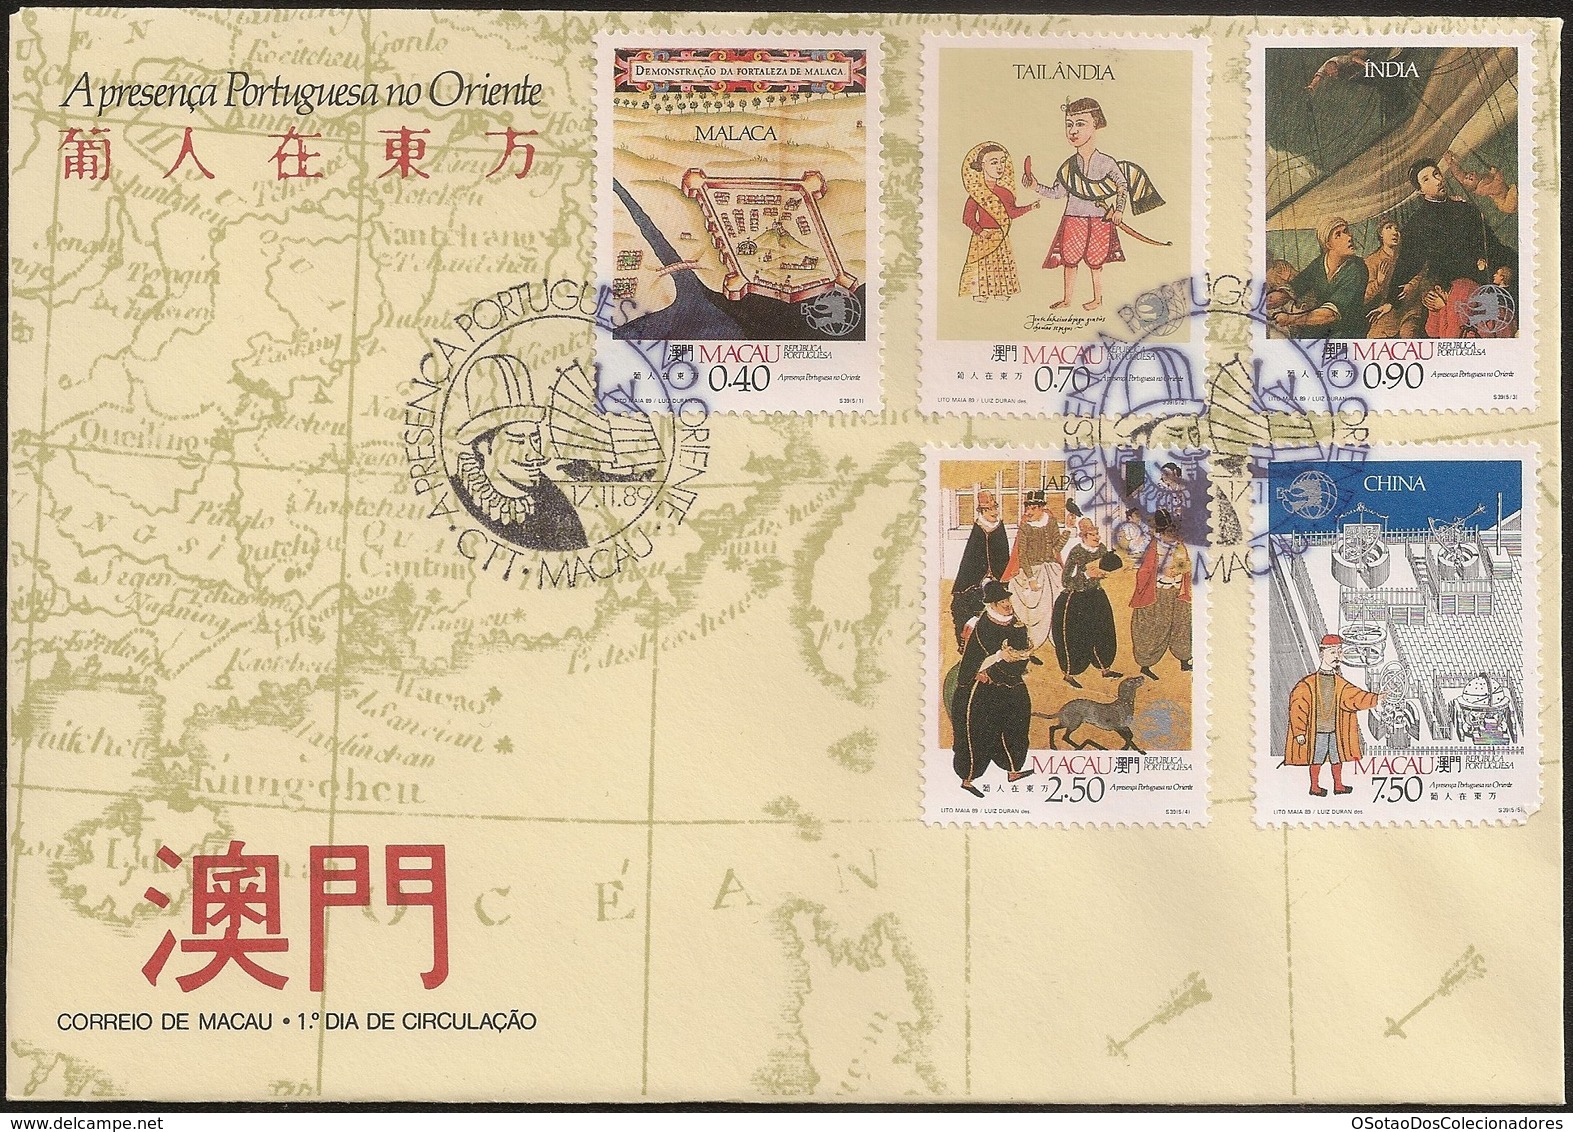 Macau Macao Chine FDC 1989 - A Presença Portuguesa Oriente - Stamp Exhibition Portuguese Presence In Far East - MNH/Neuf - FDC